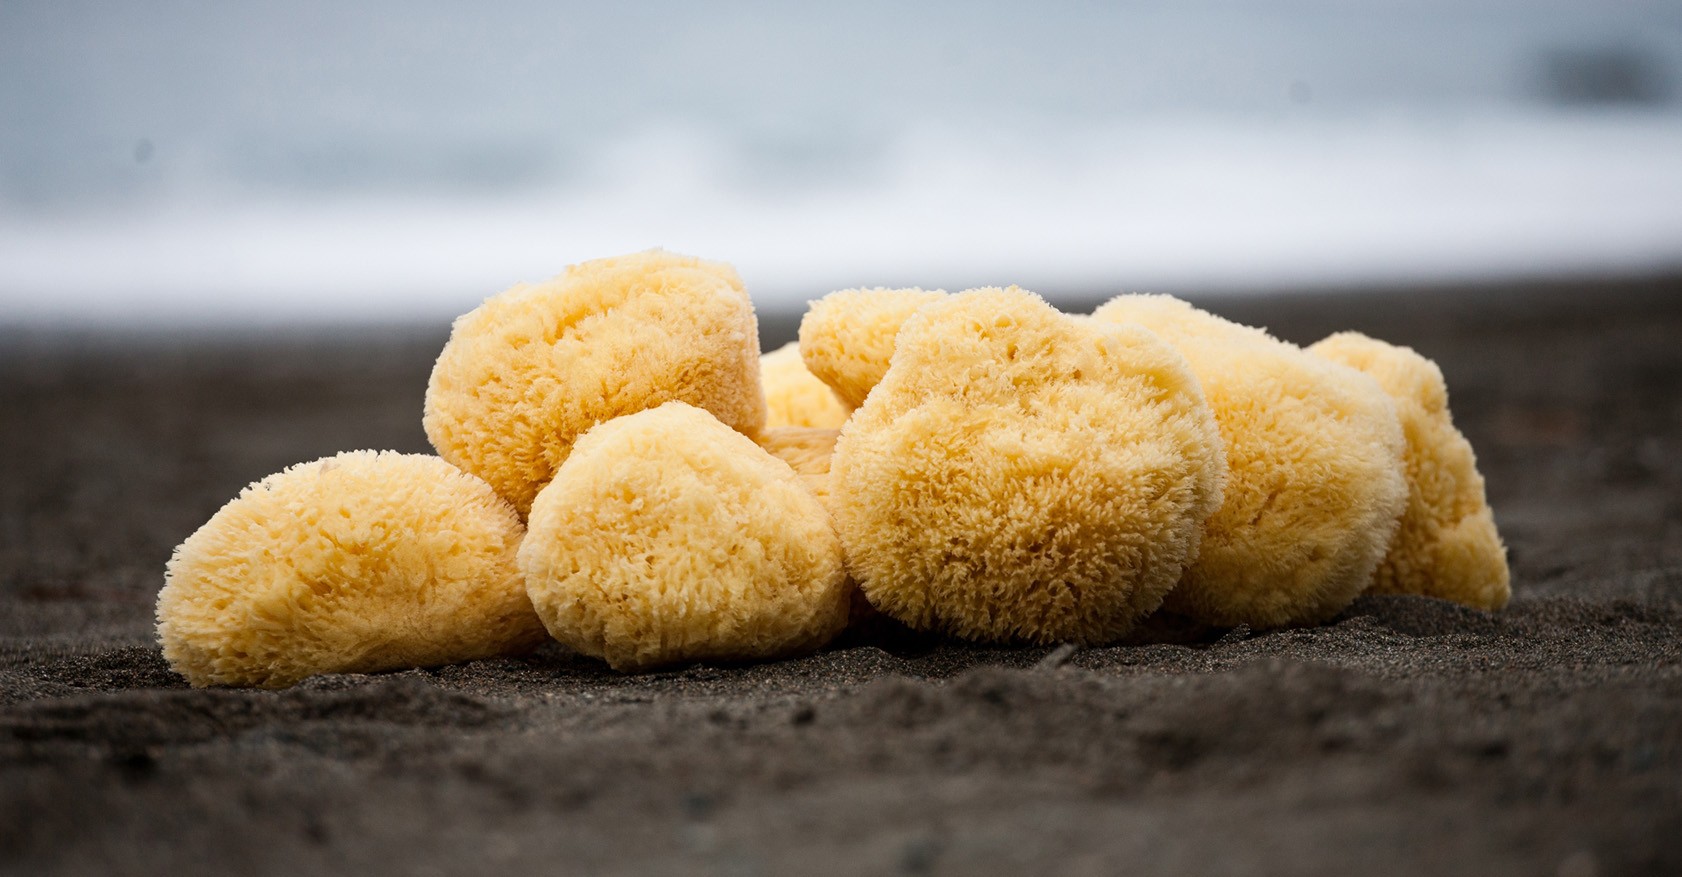 Natural sponges